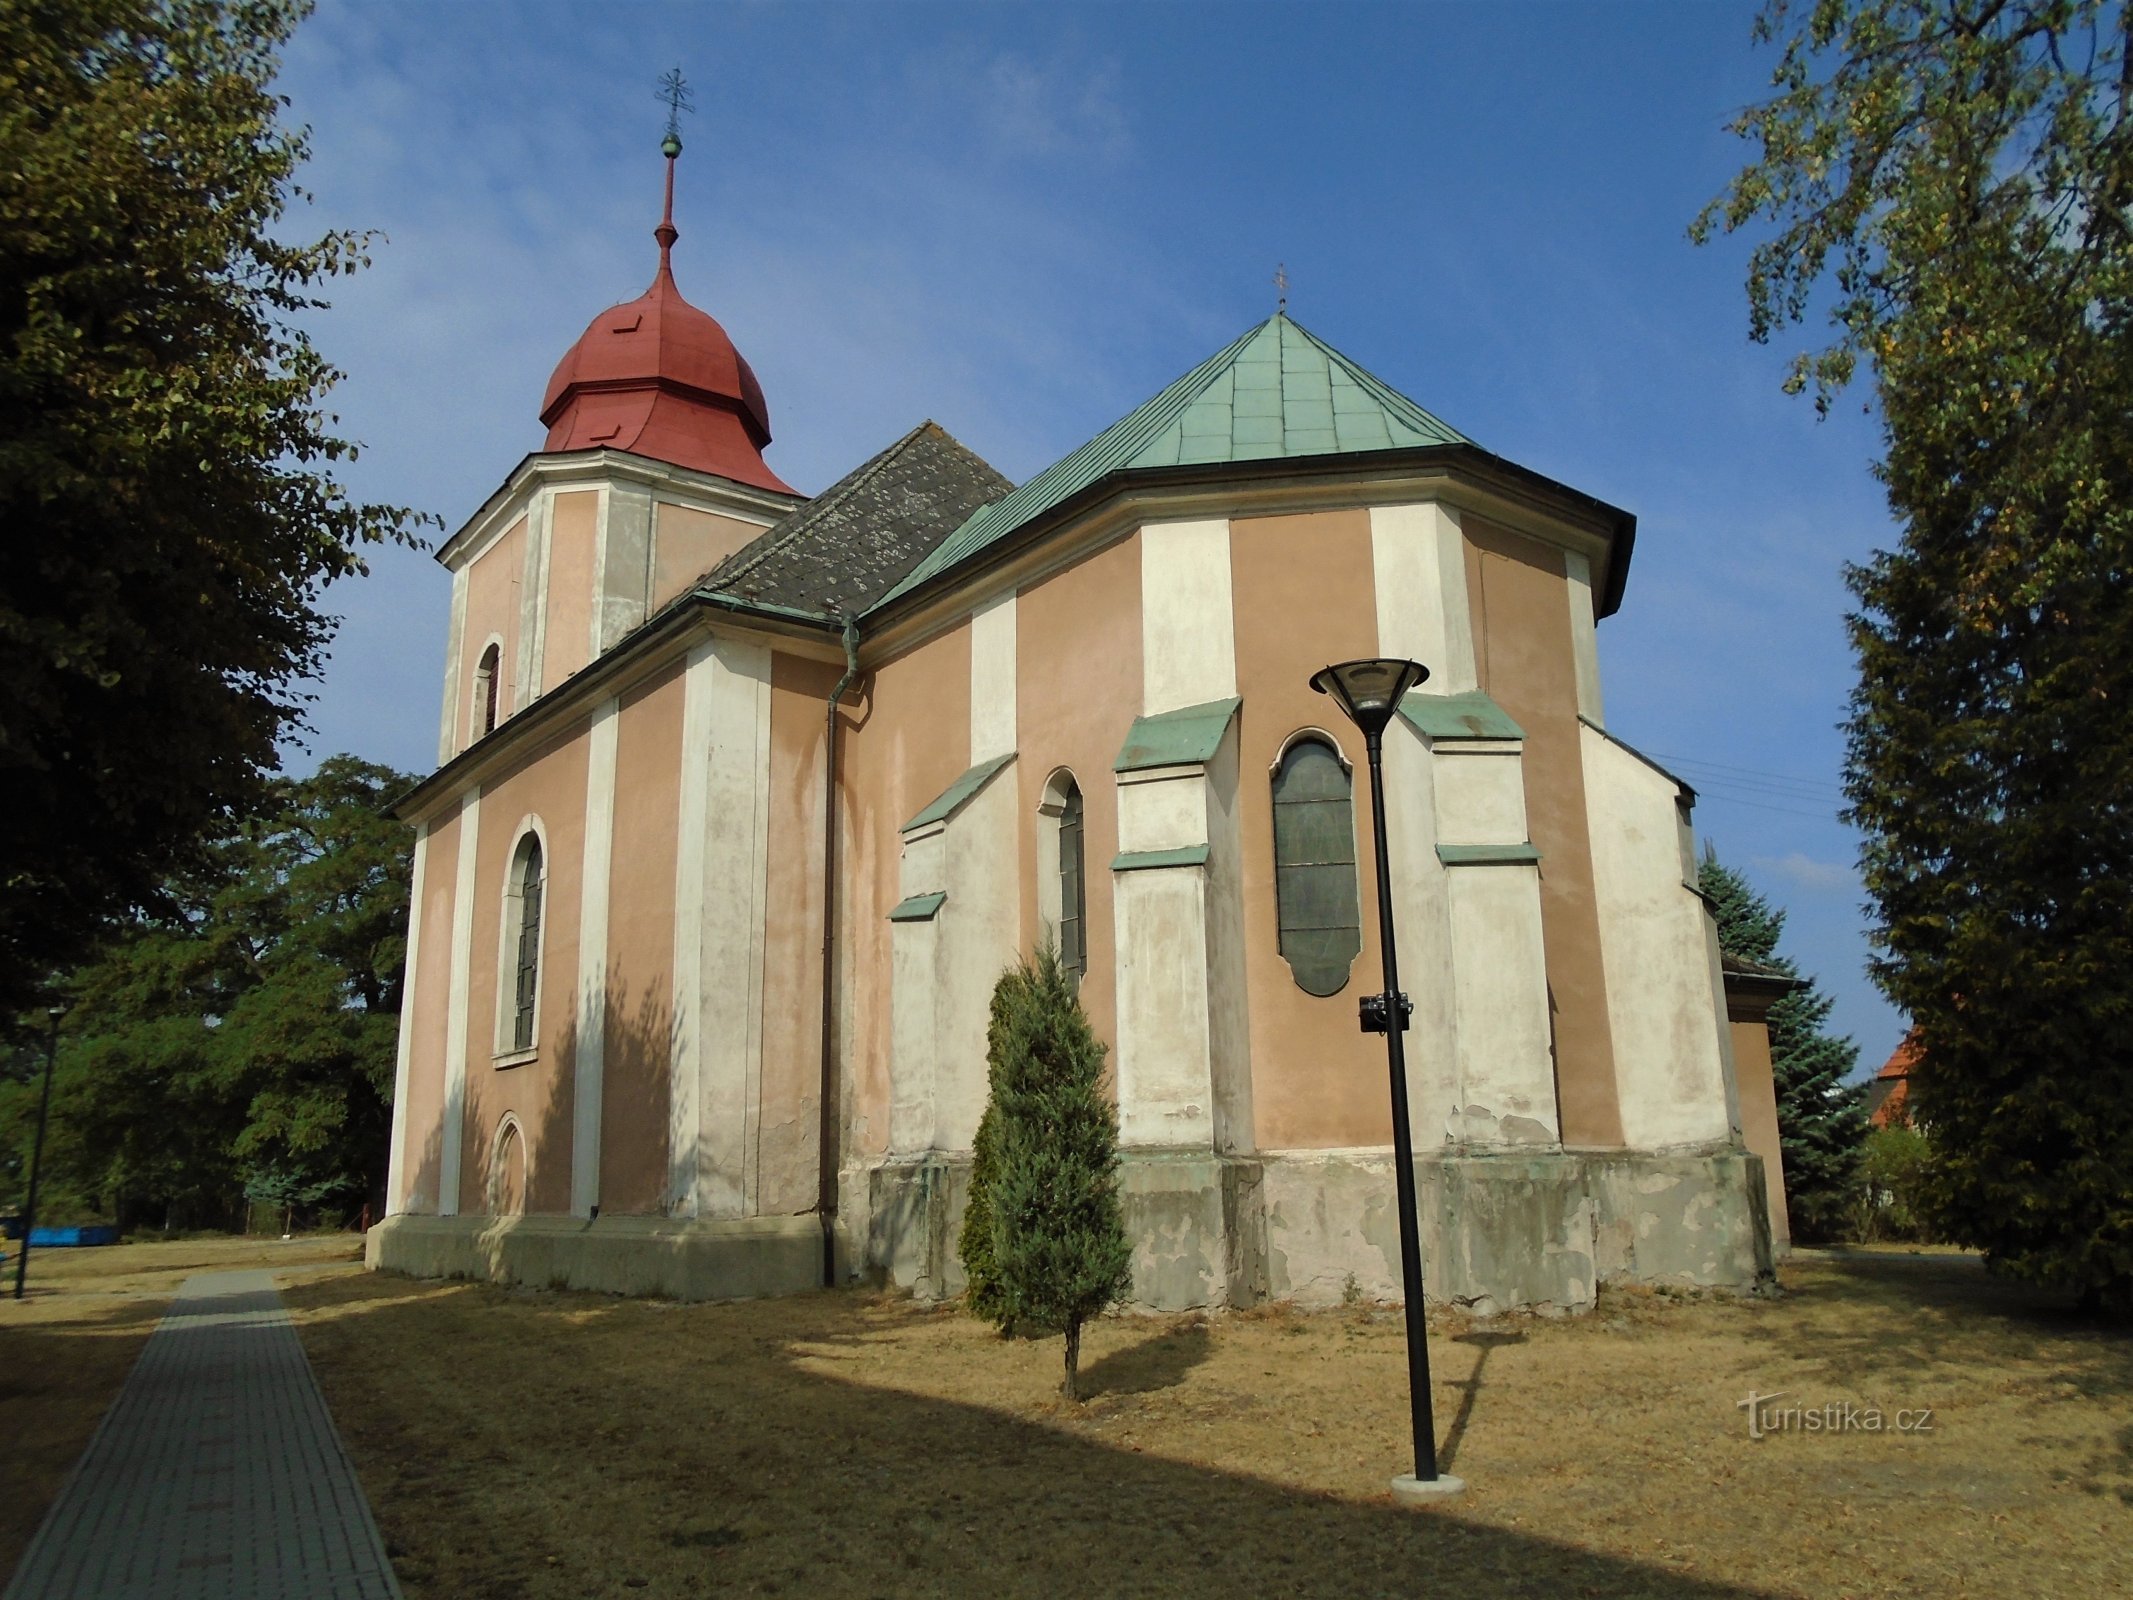 Biserica Sf. Petru și Pavel, apostolii (Rohovládova Bělá, 31.8.2018 august XNUMX)